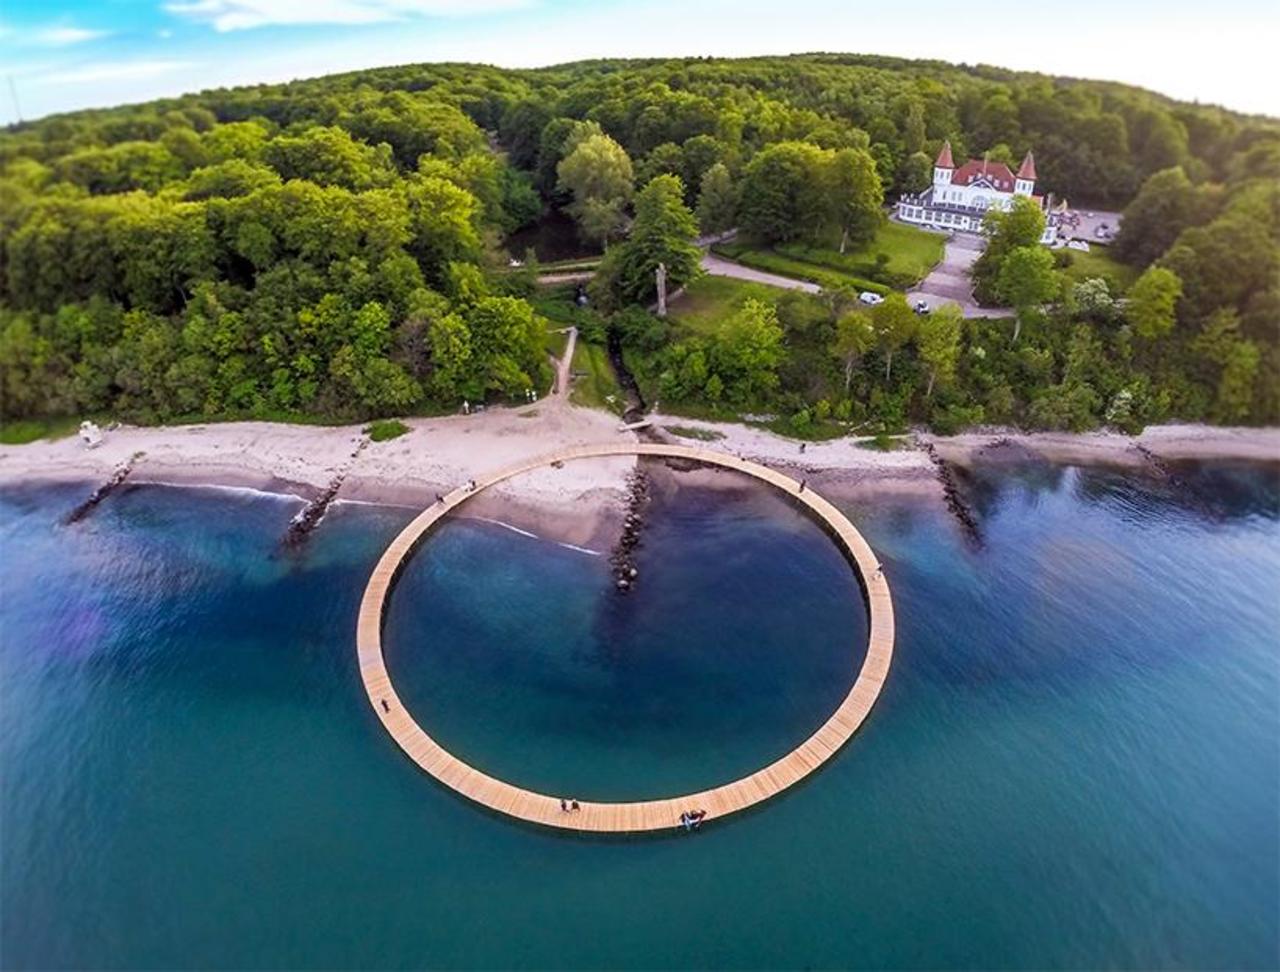 Gjøde & Povlsgaard Arkitekter created ‘The Infinite Bridge’ for Sculpture by the Sea festival in Aarhus, Denmark http://t.co/OuLgnzzqT3